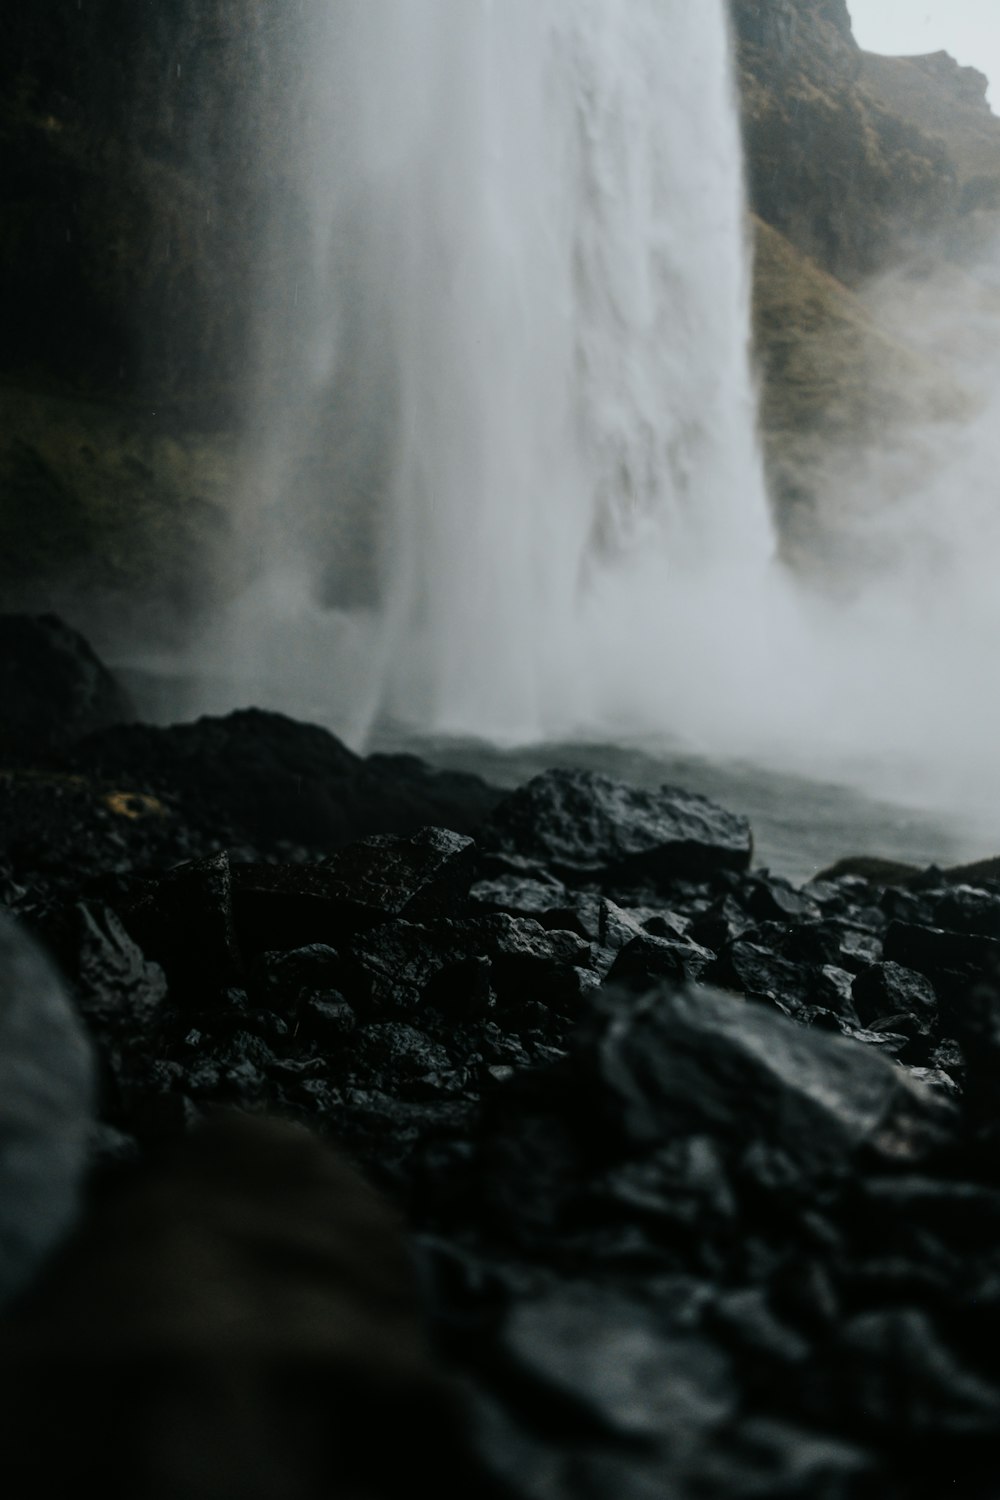 wet stones near waterfalls